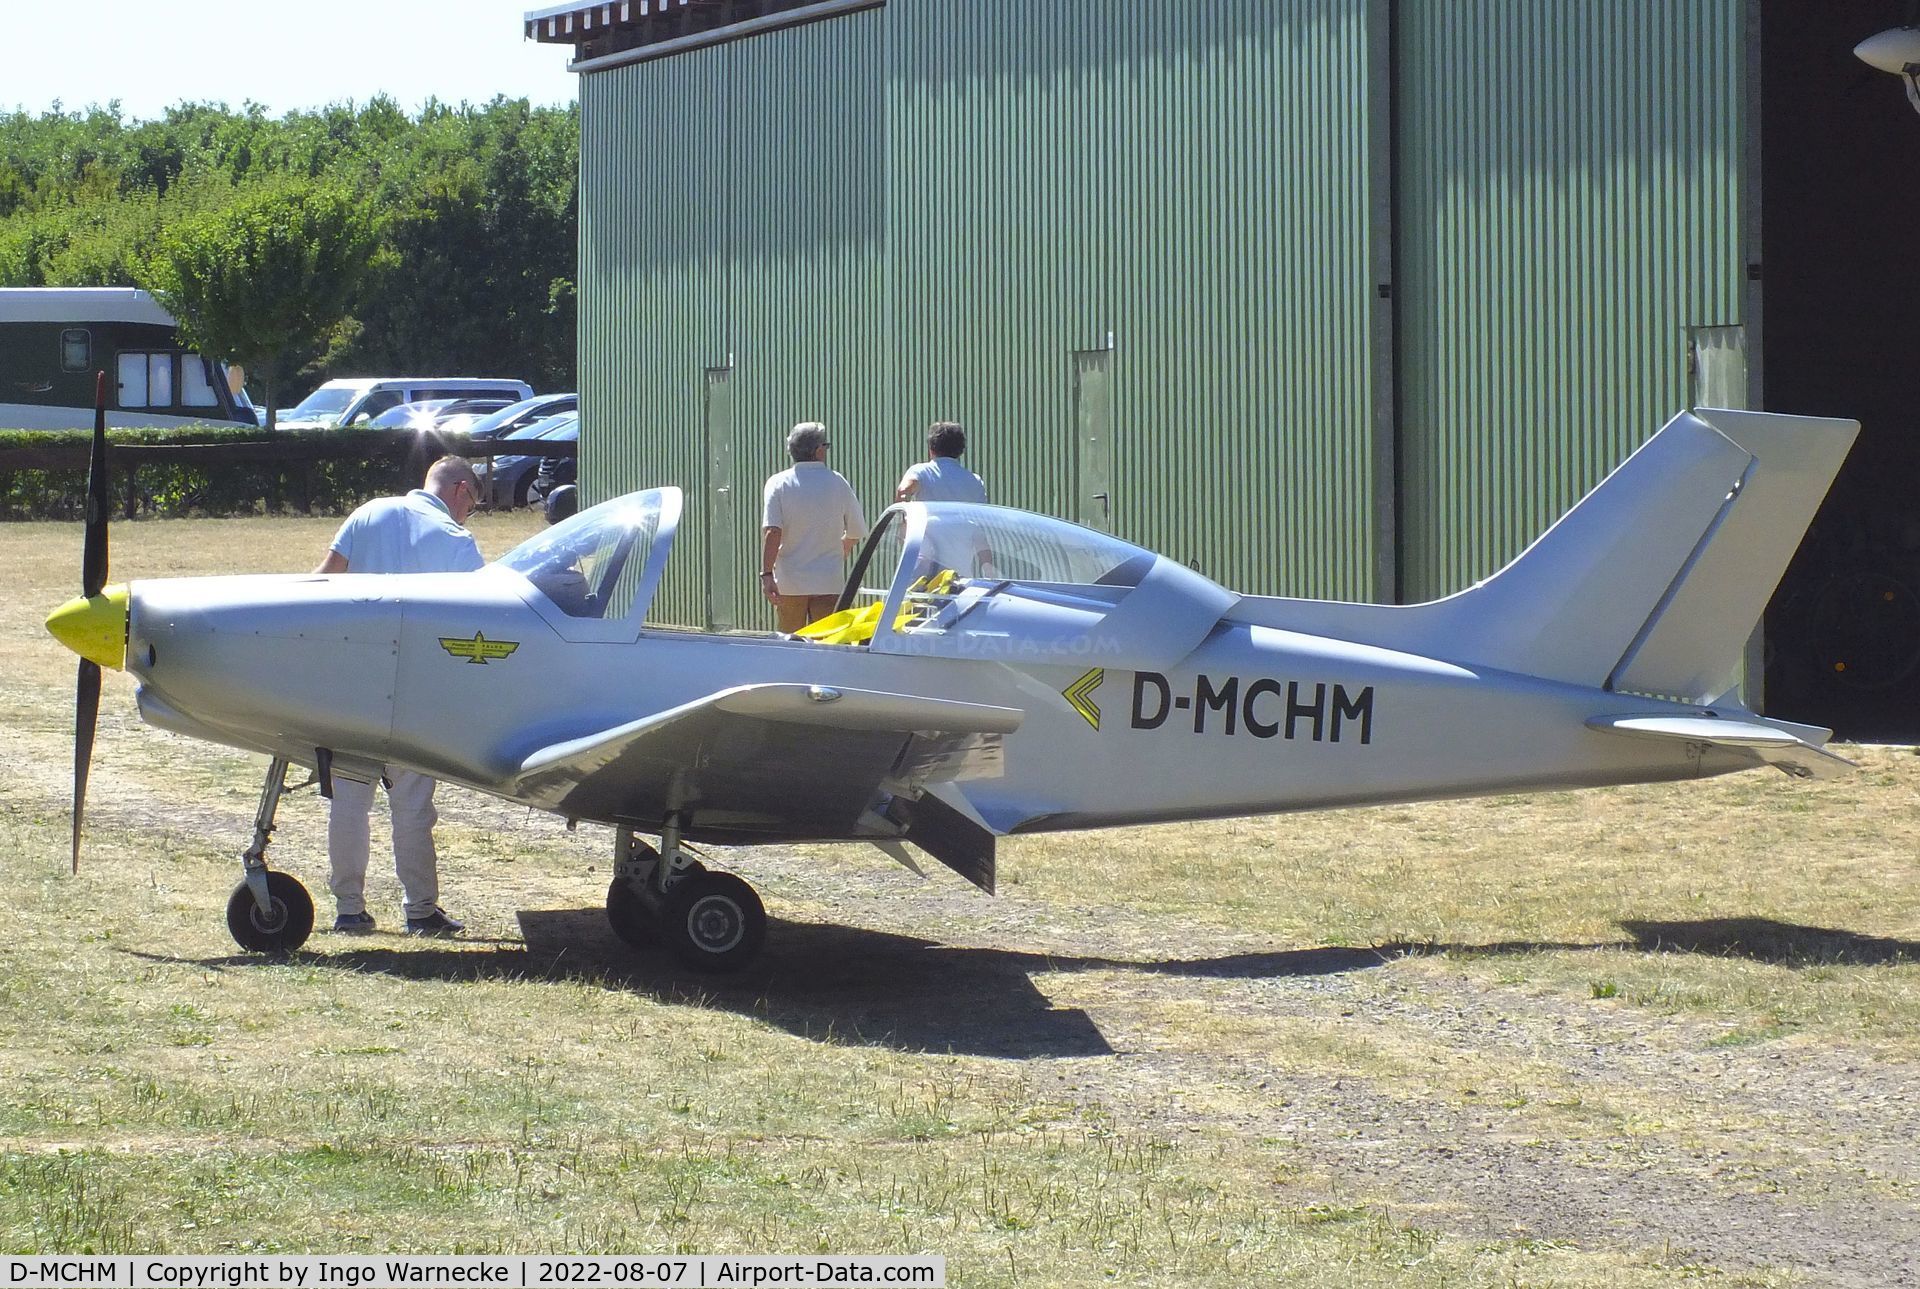 D-MCHM, Alpi Aviation Pioneer 300 C/N not found_D-MCHM, Alpi Aviation Pioneer 300 at the 2022 Flugplatz-Wiesenfest airfield display at Weilerswist-Müggenhausen ultralight airfield